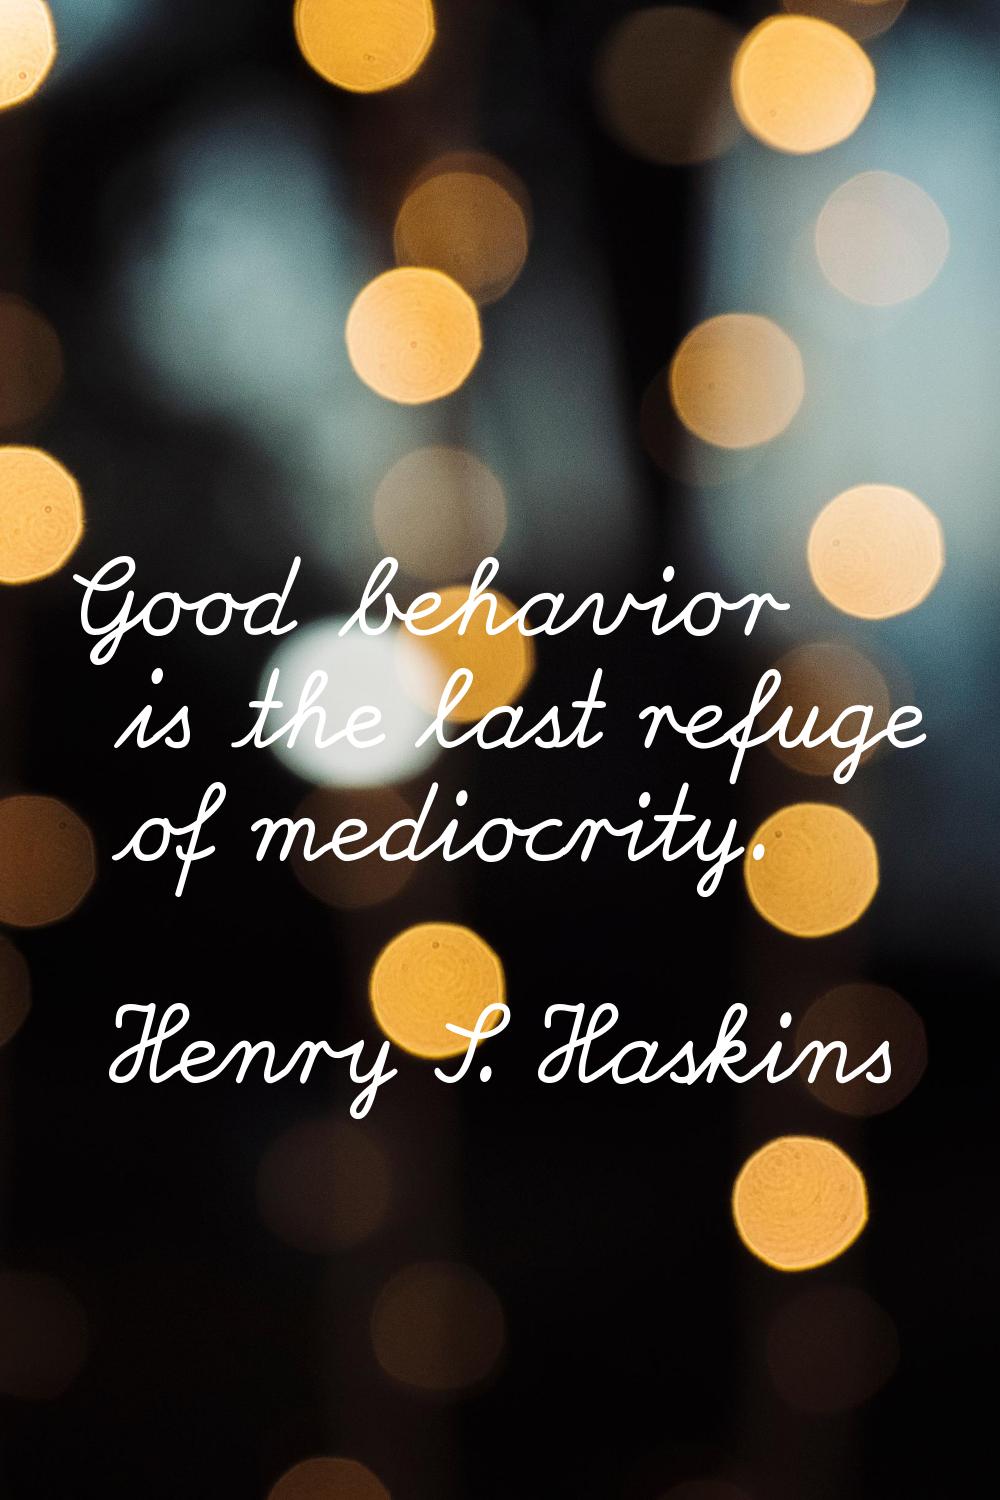 Good behavior is the last refuge of mediocrity.